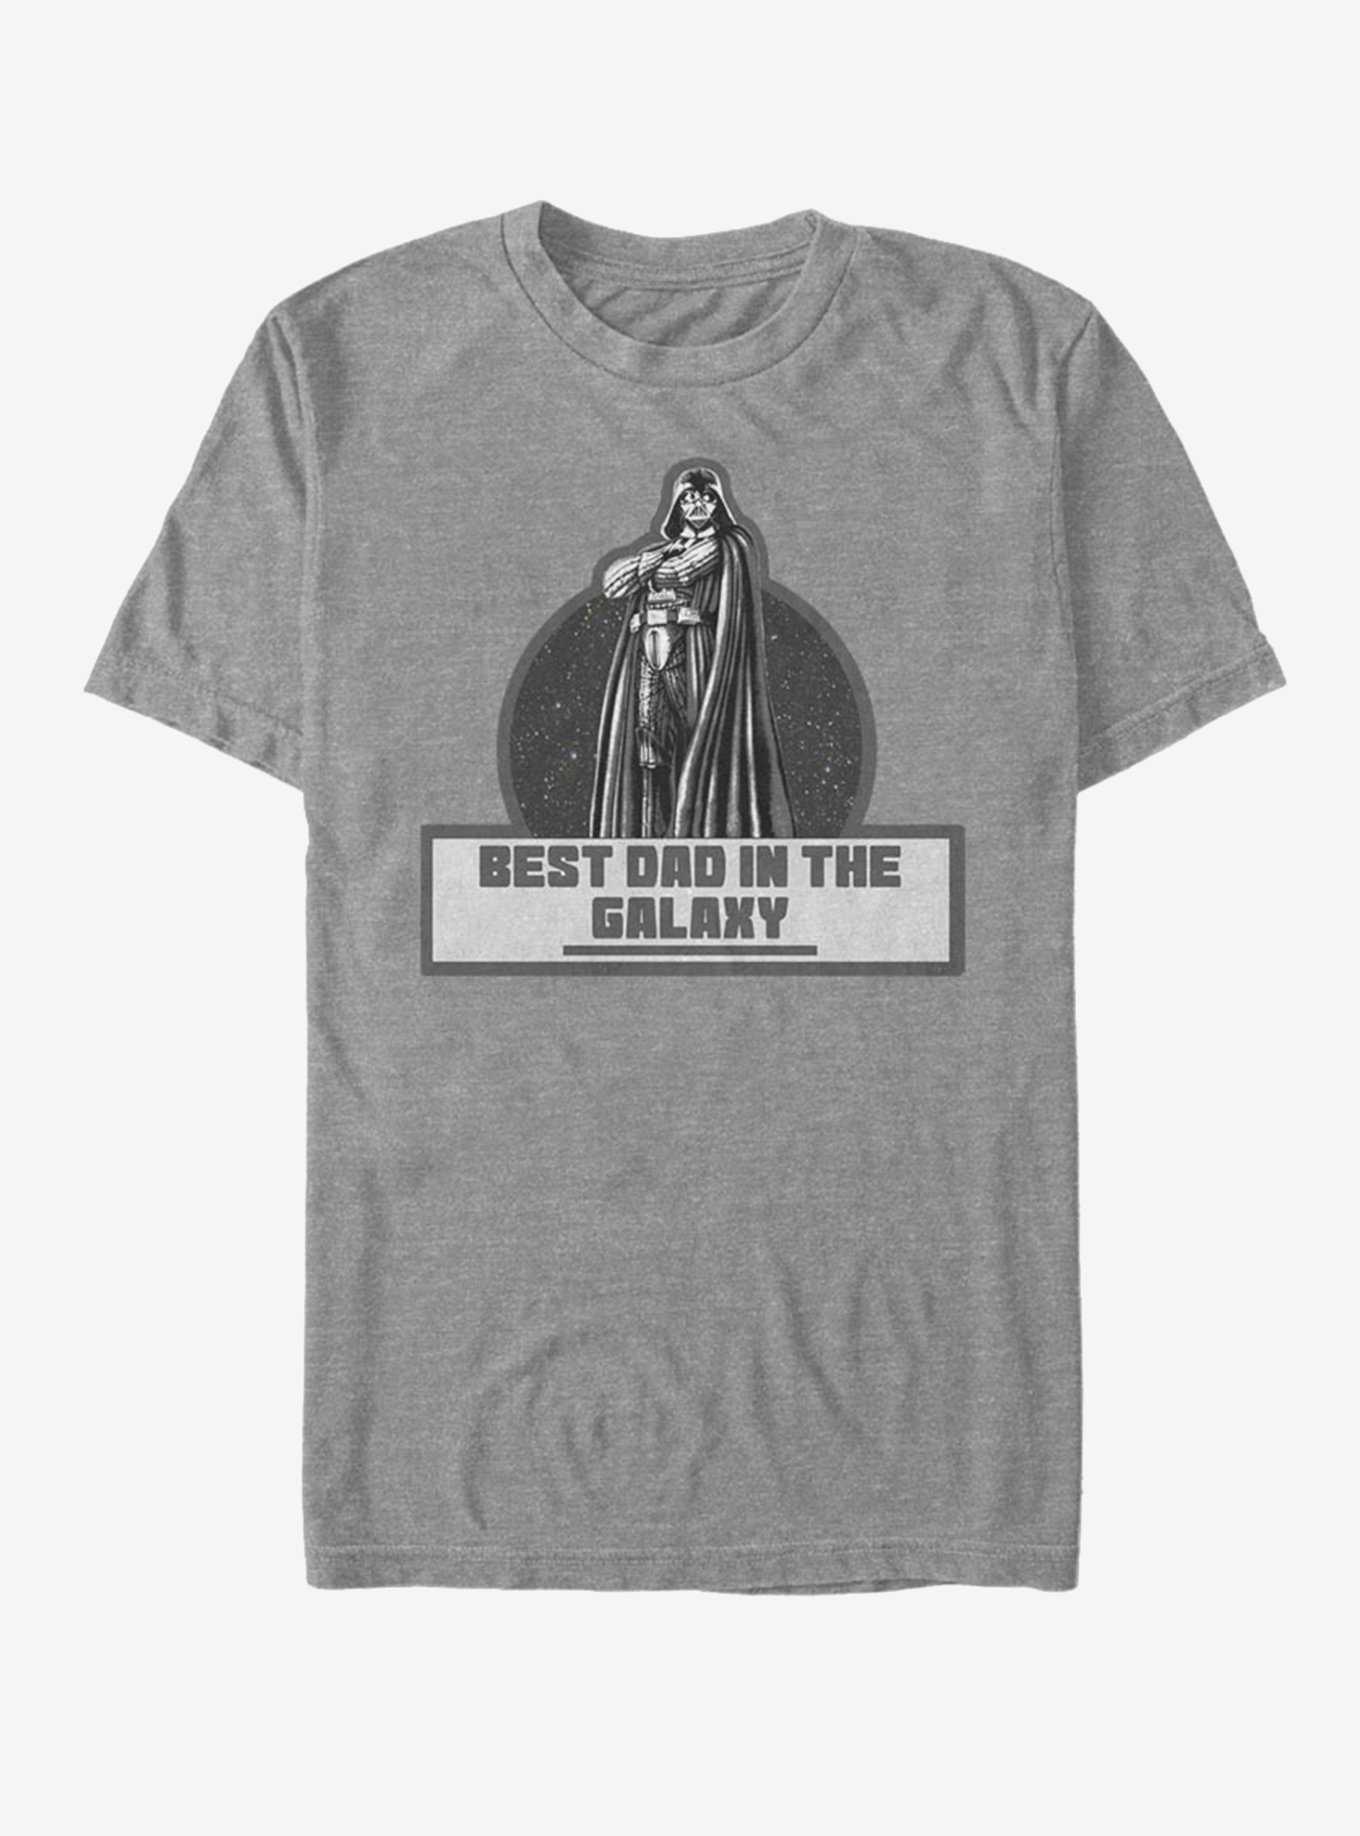 Star Wars Galaxy Dad T-Shirt, , hi-res